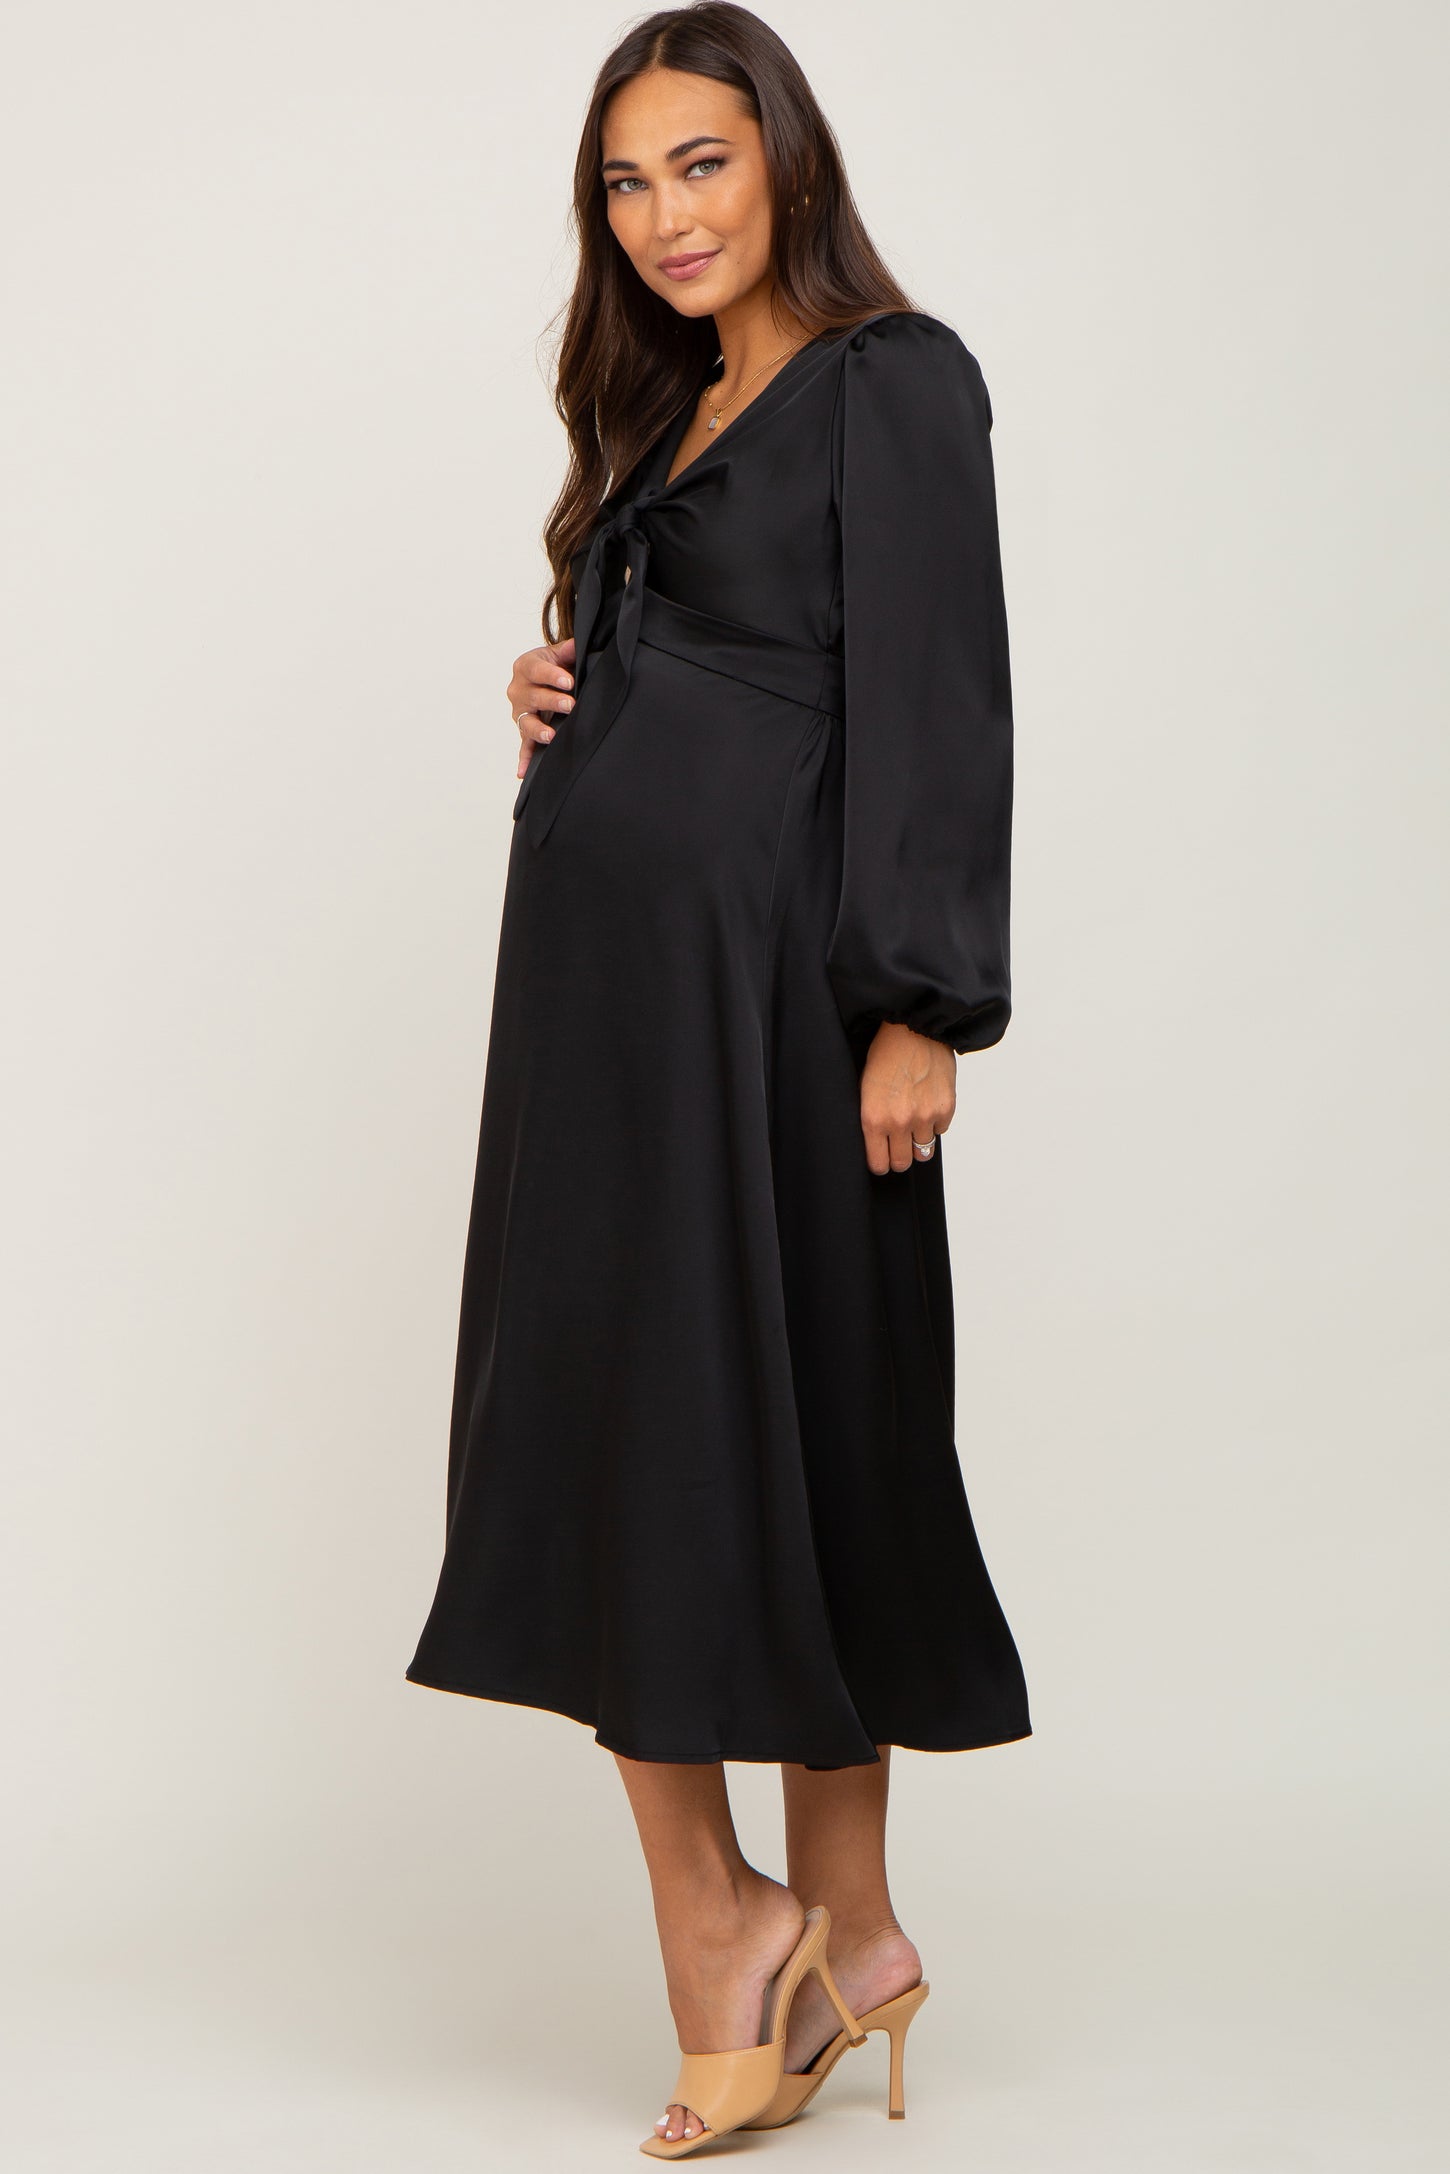 Black Satin Tie Front Cutout Maternity Midi Dress